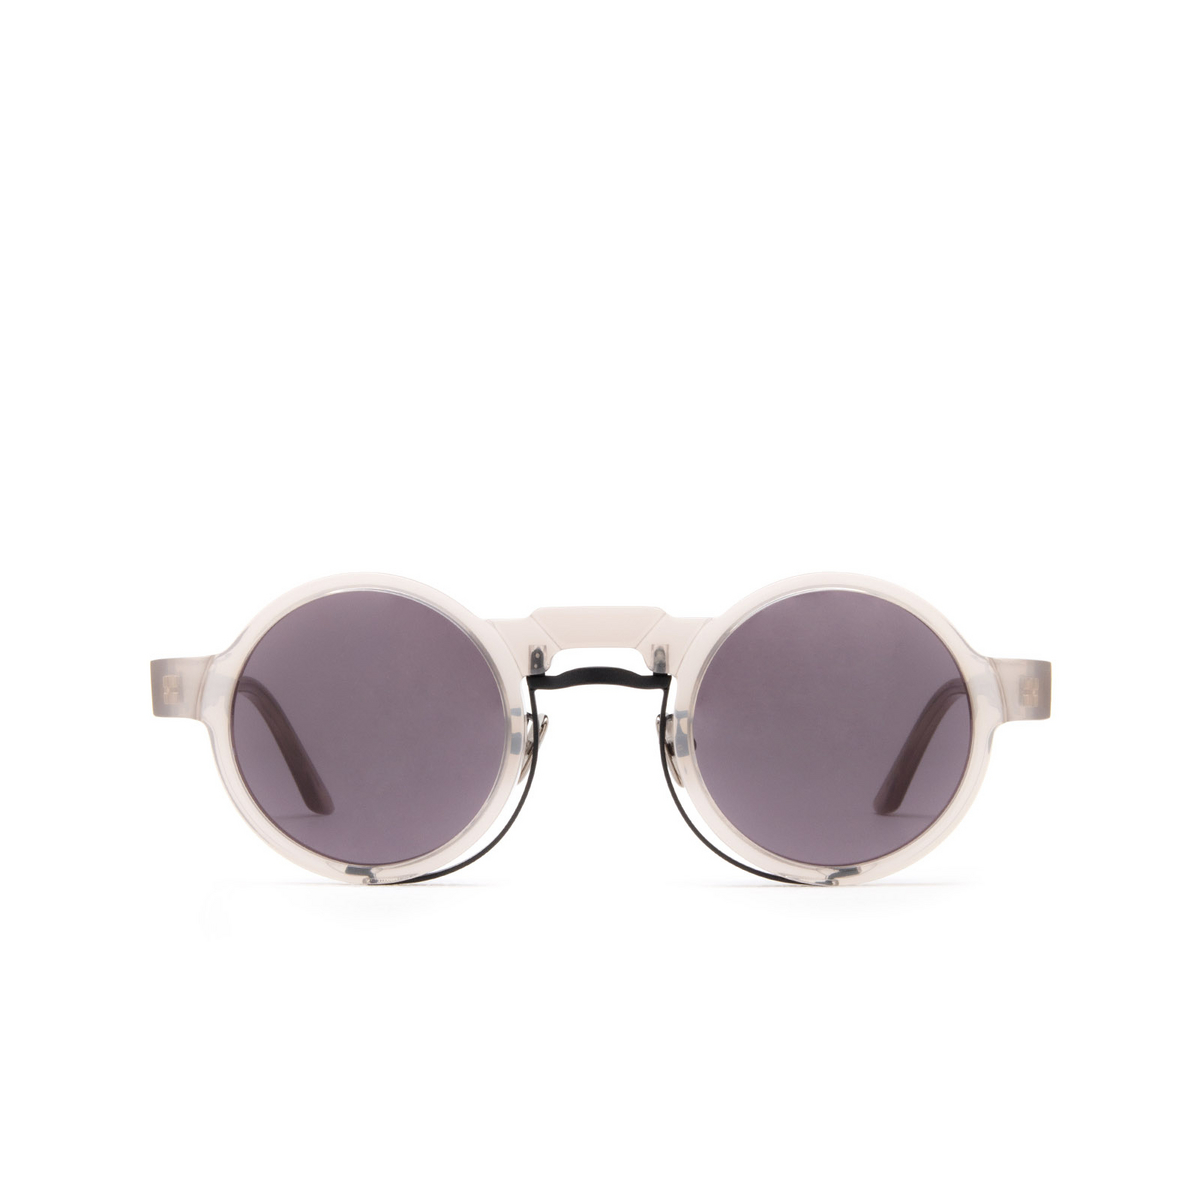 Kuboraum N3 Sunglasses PW Grey Pewter & Black Matt - front view